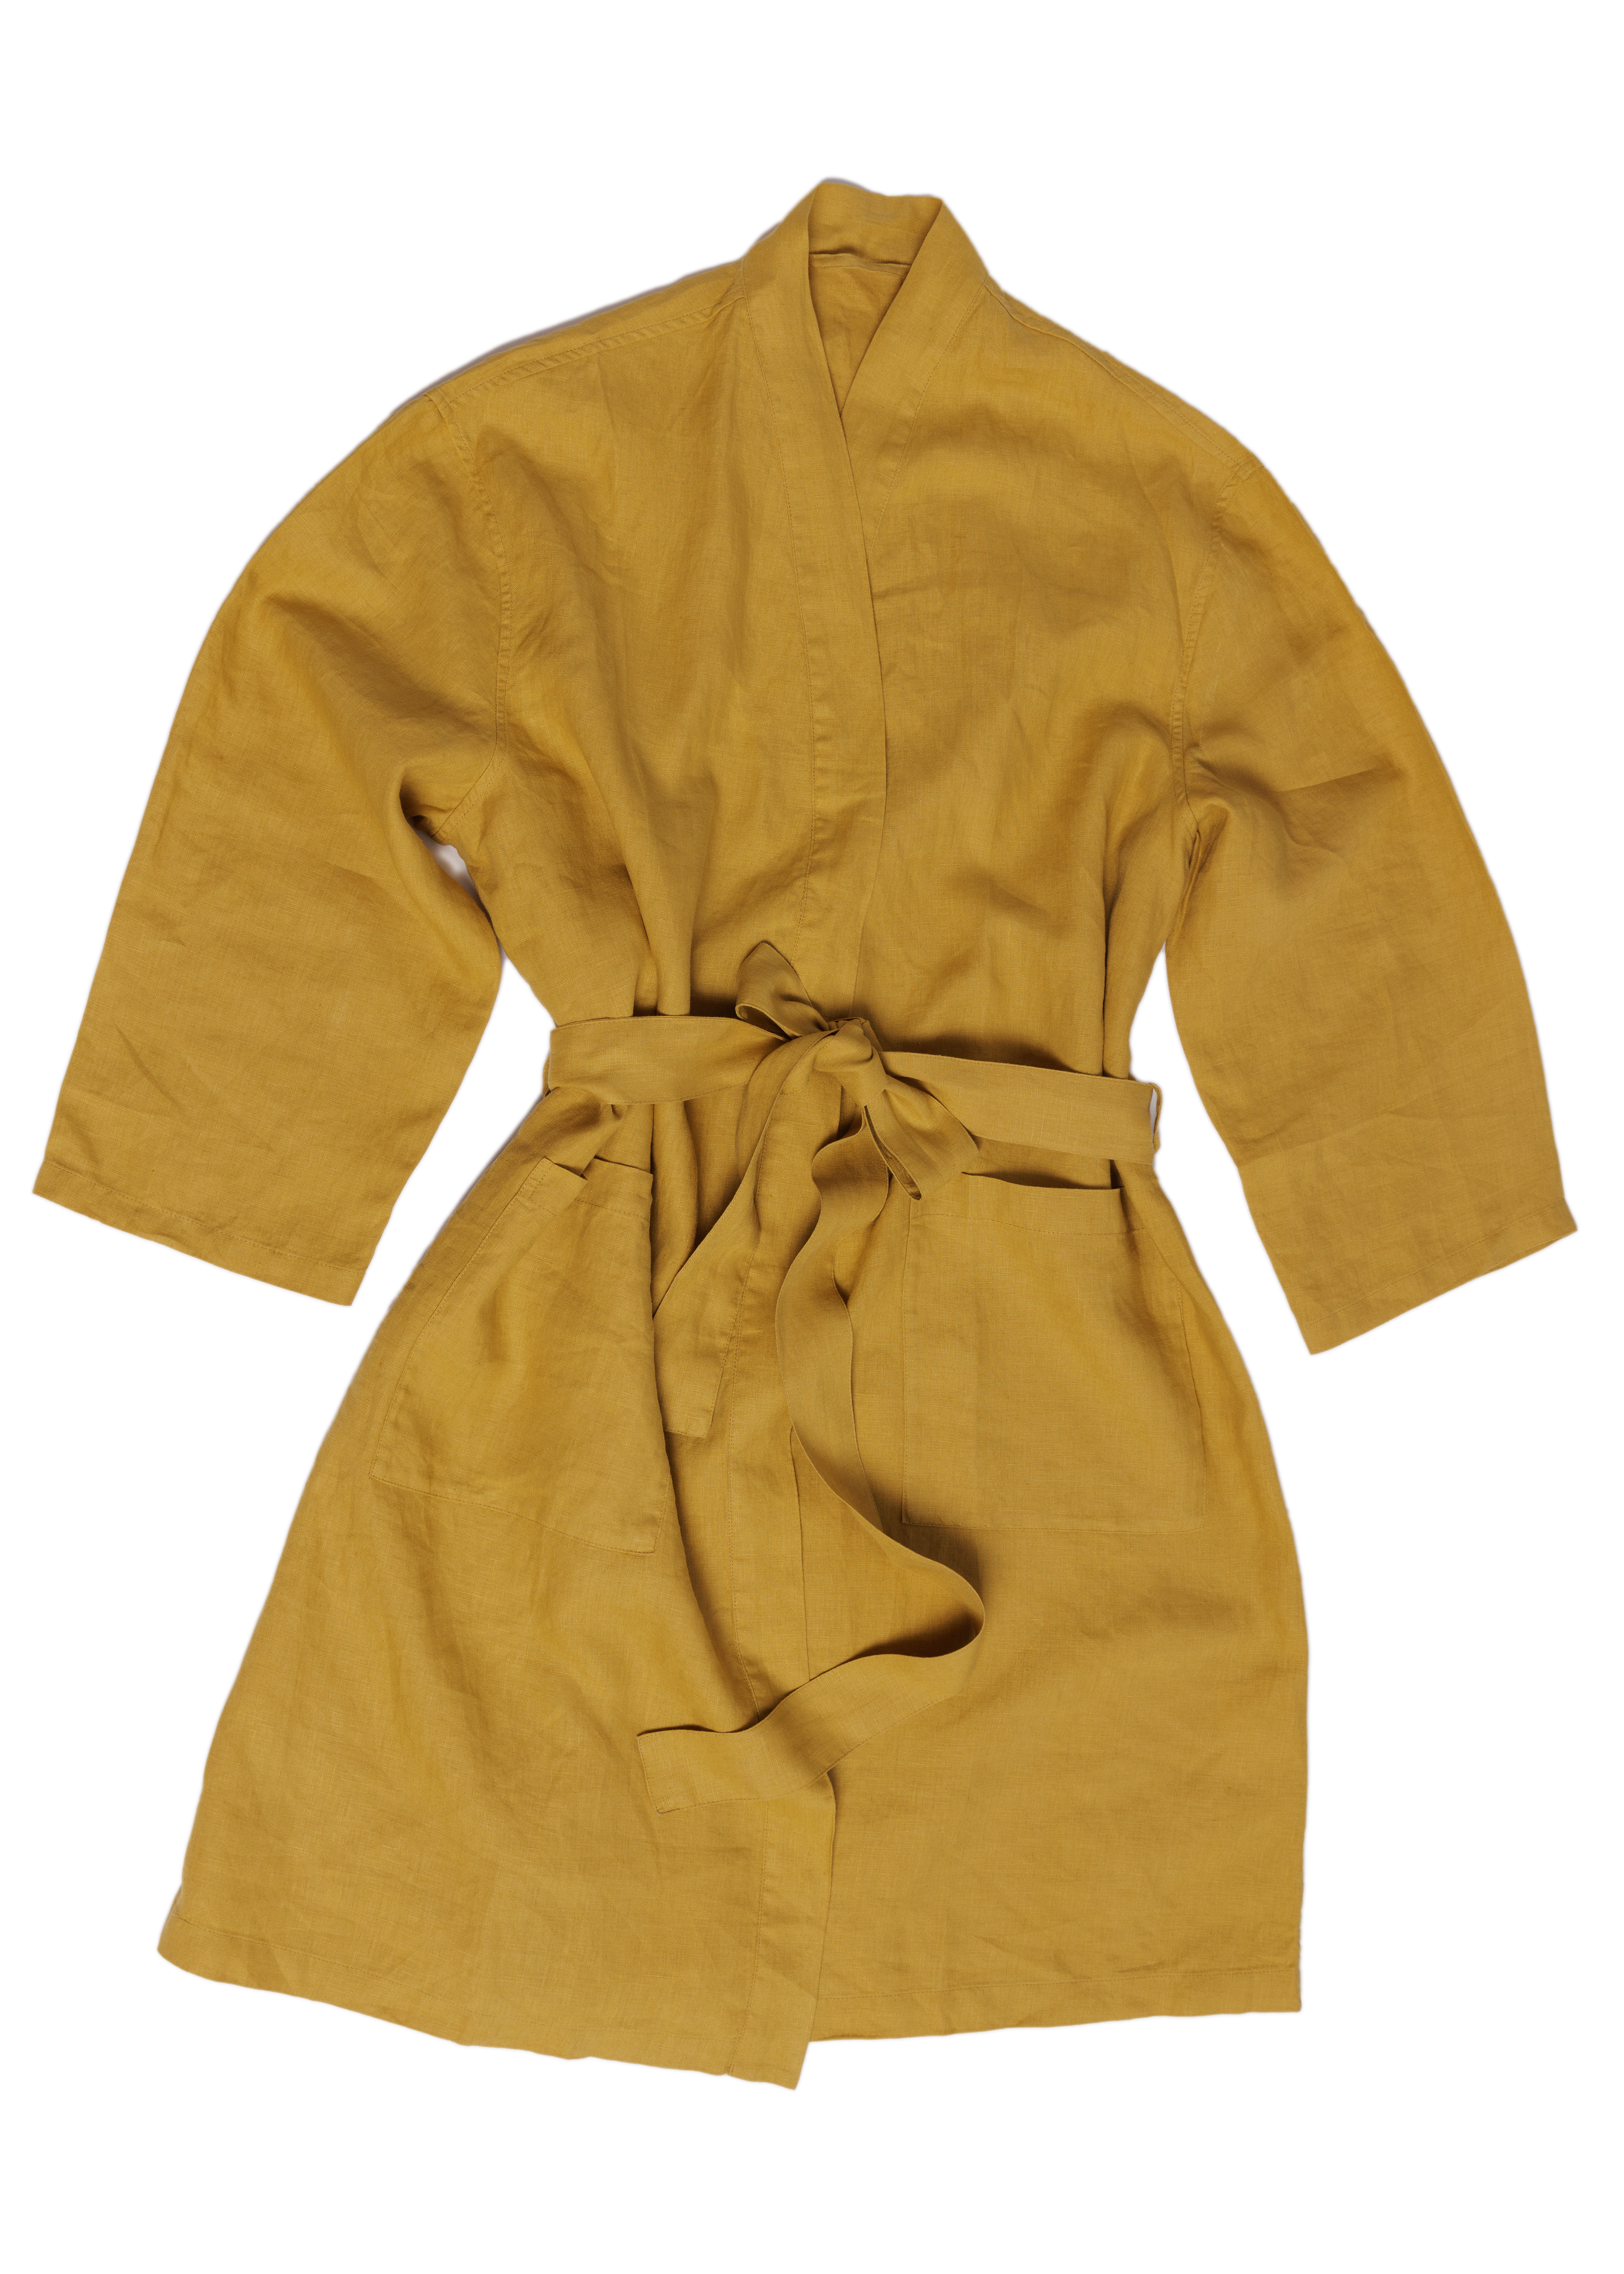 The Linen Robe